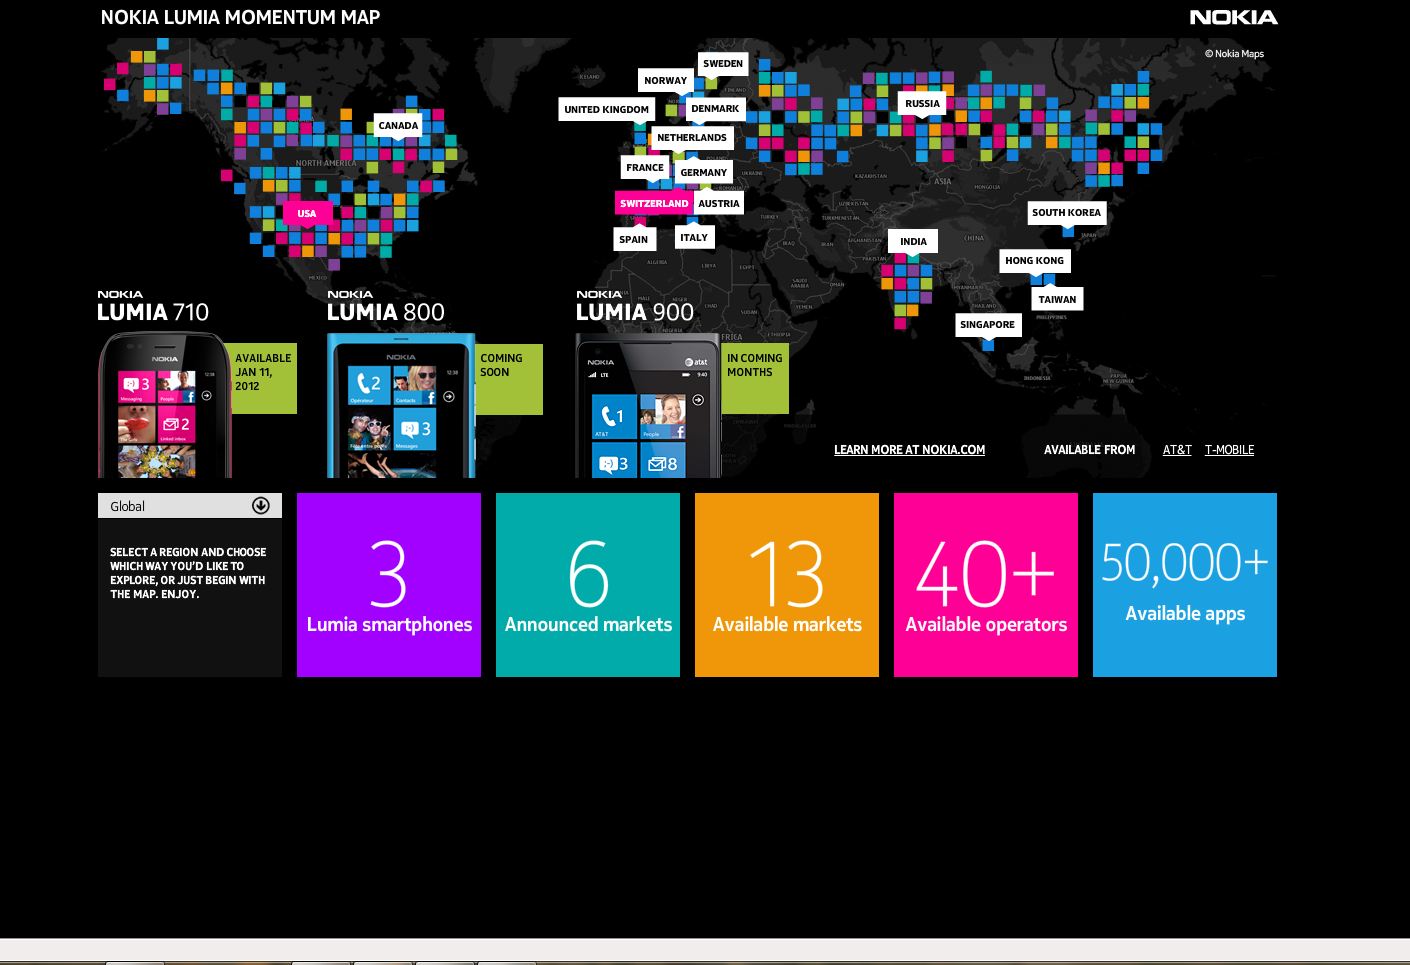 Nokia Lumia Momentum Map Wp7 Connect